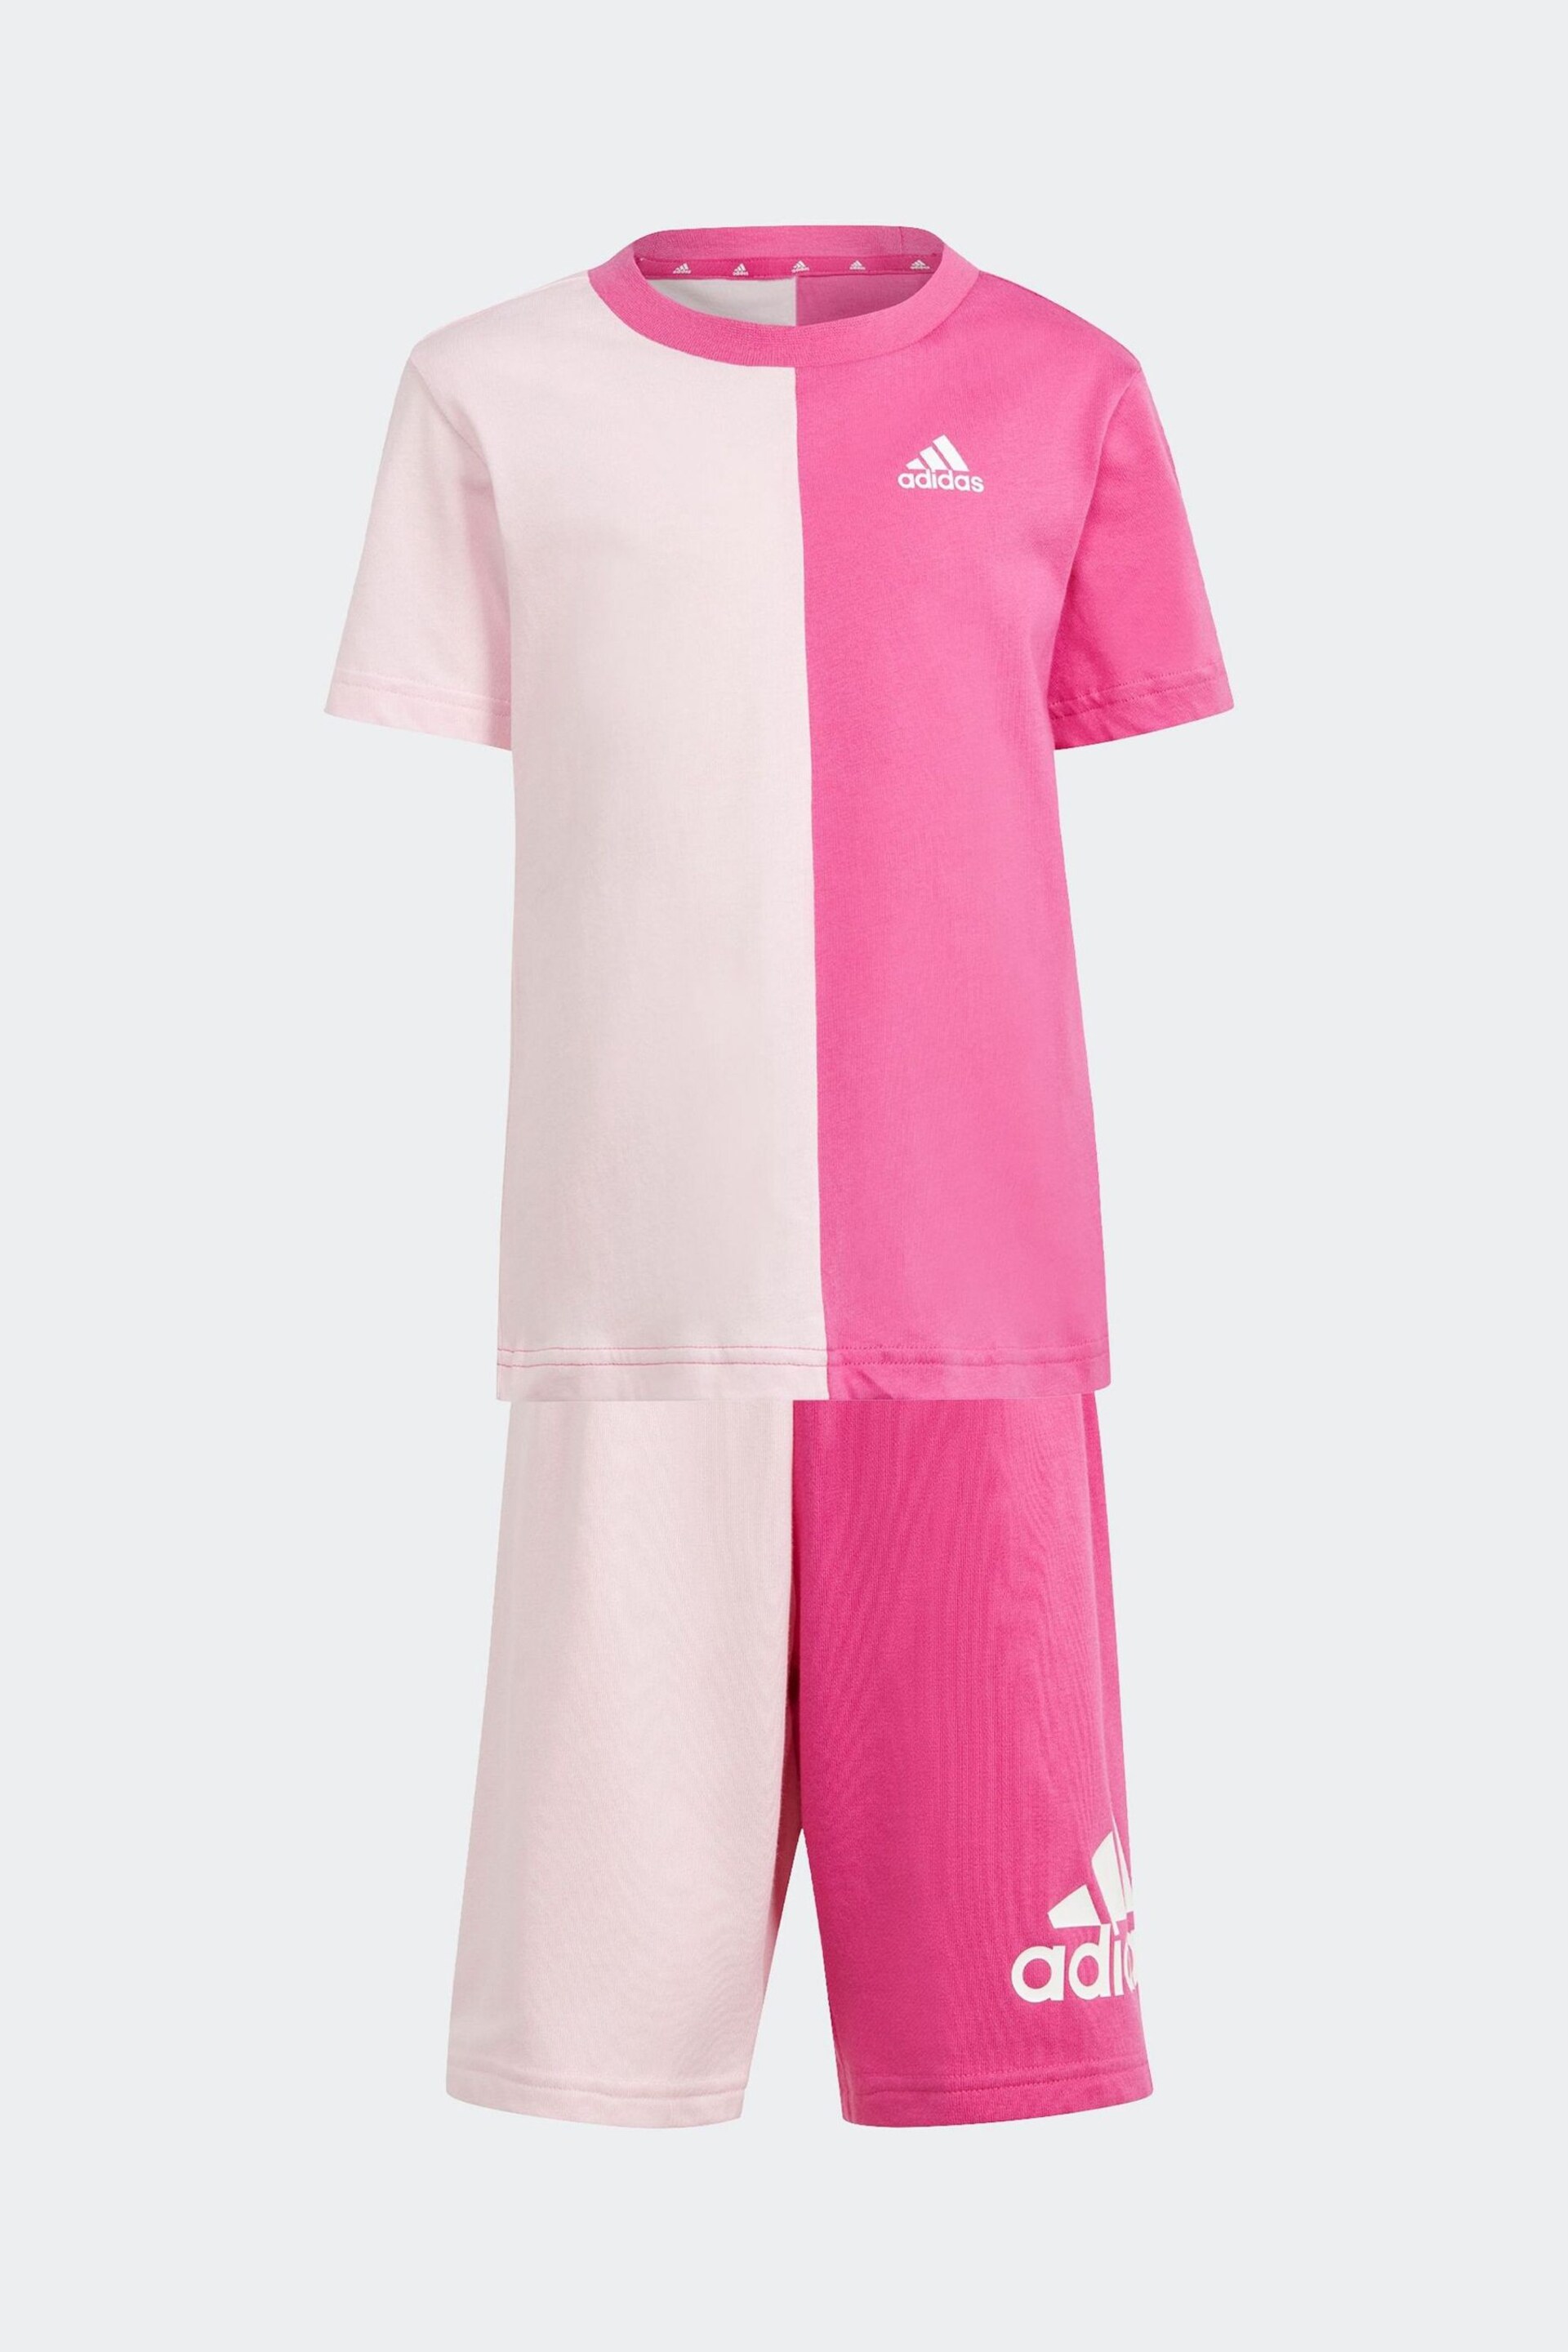 adidas Pink Sportswear T-Shirt and Shorts Set - Image 5 of 10